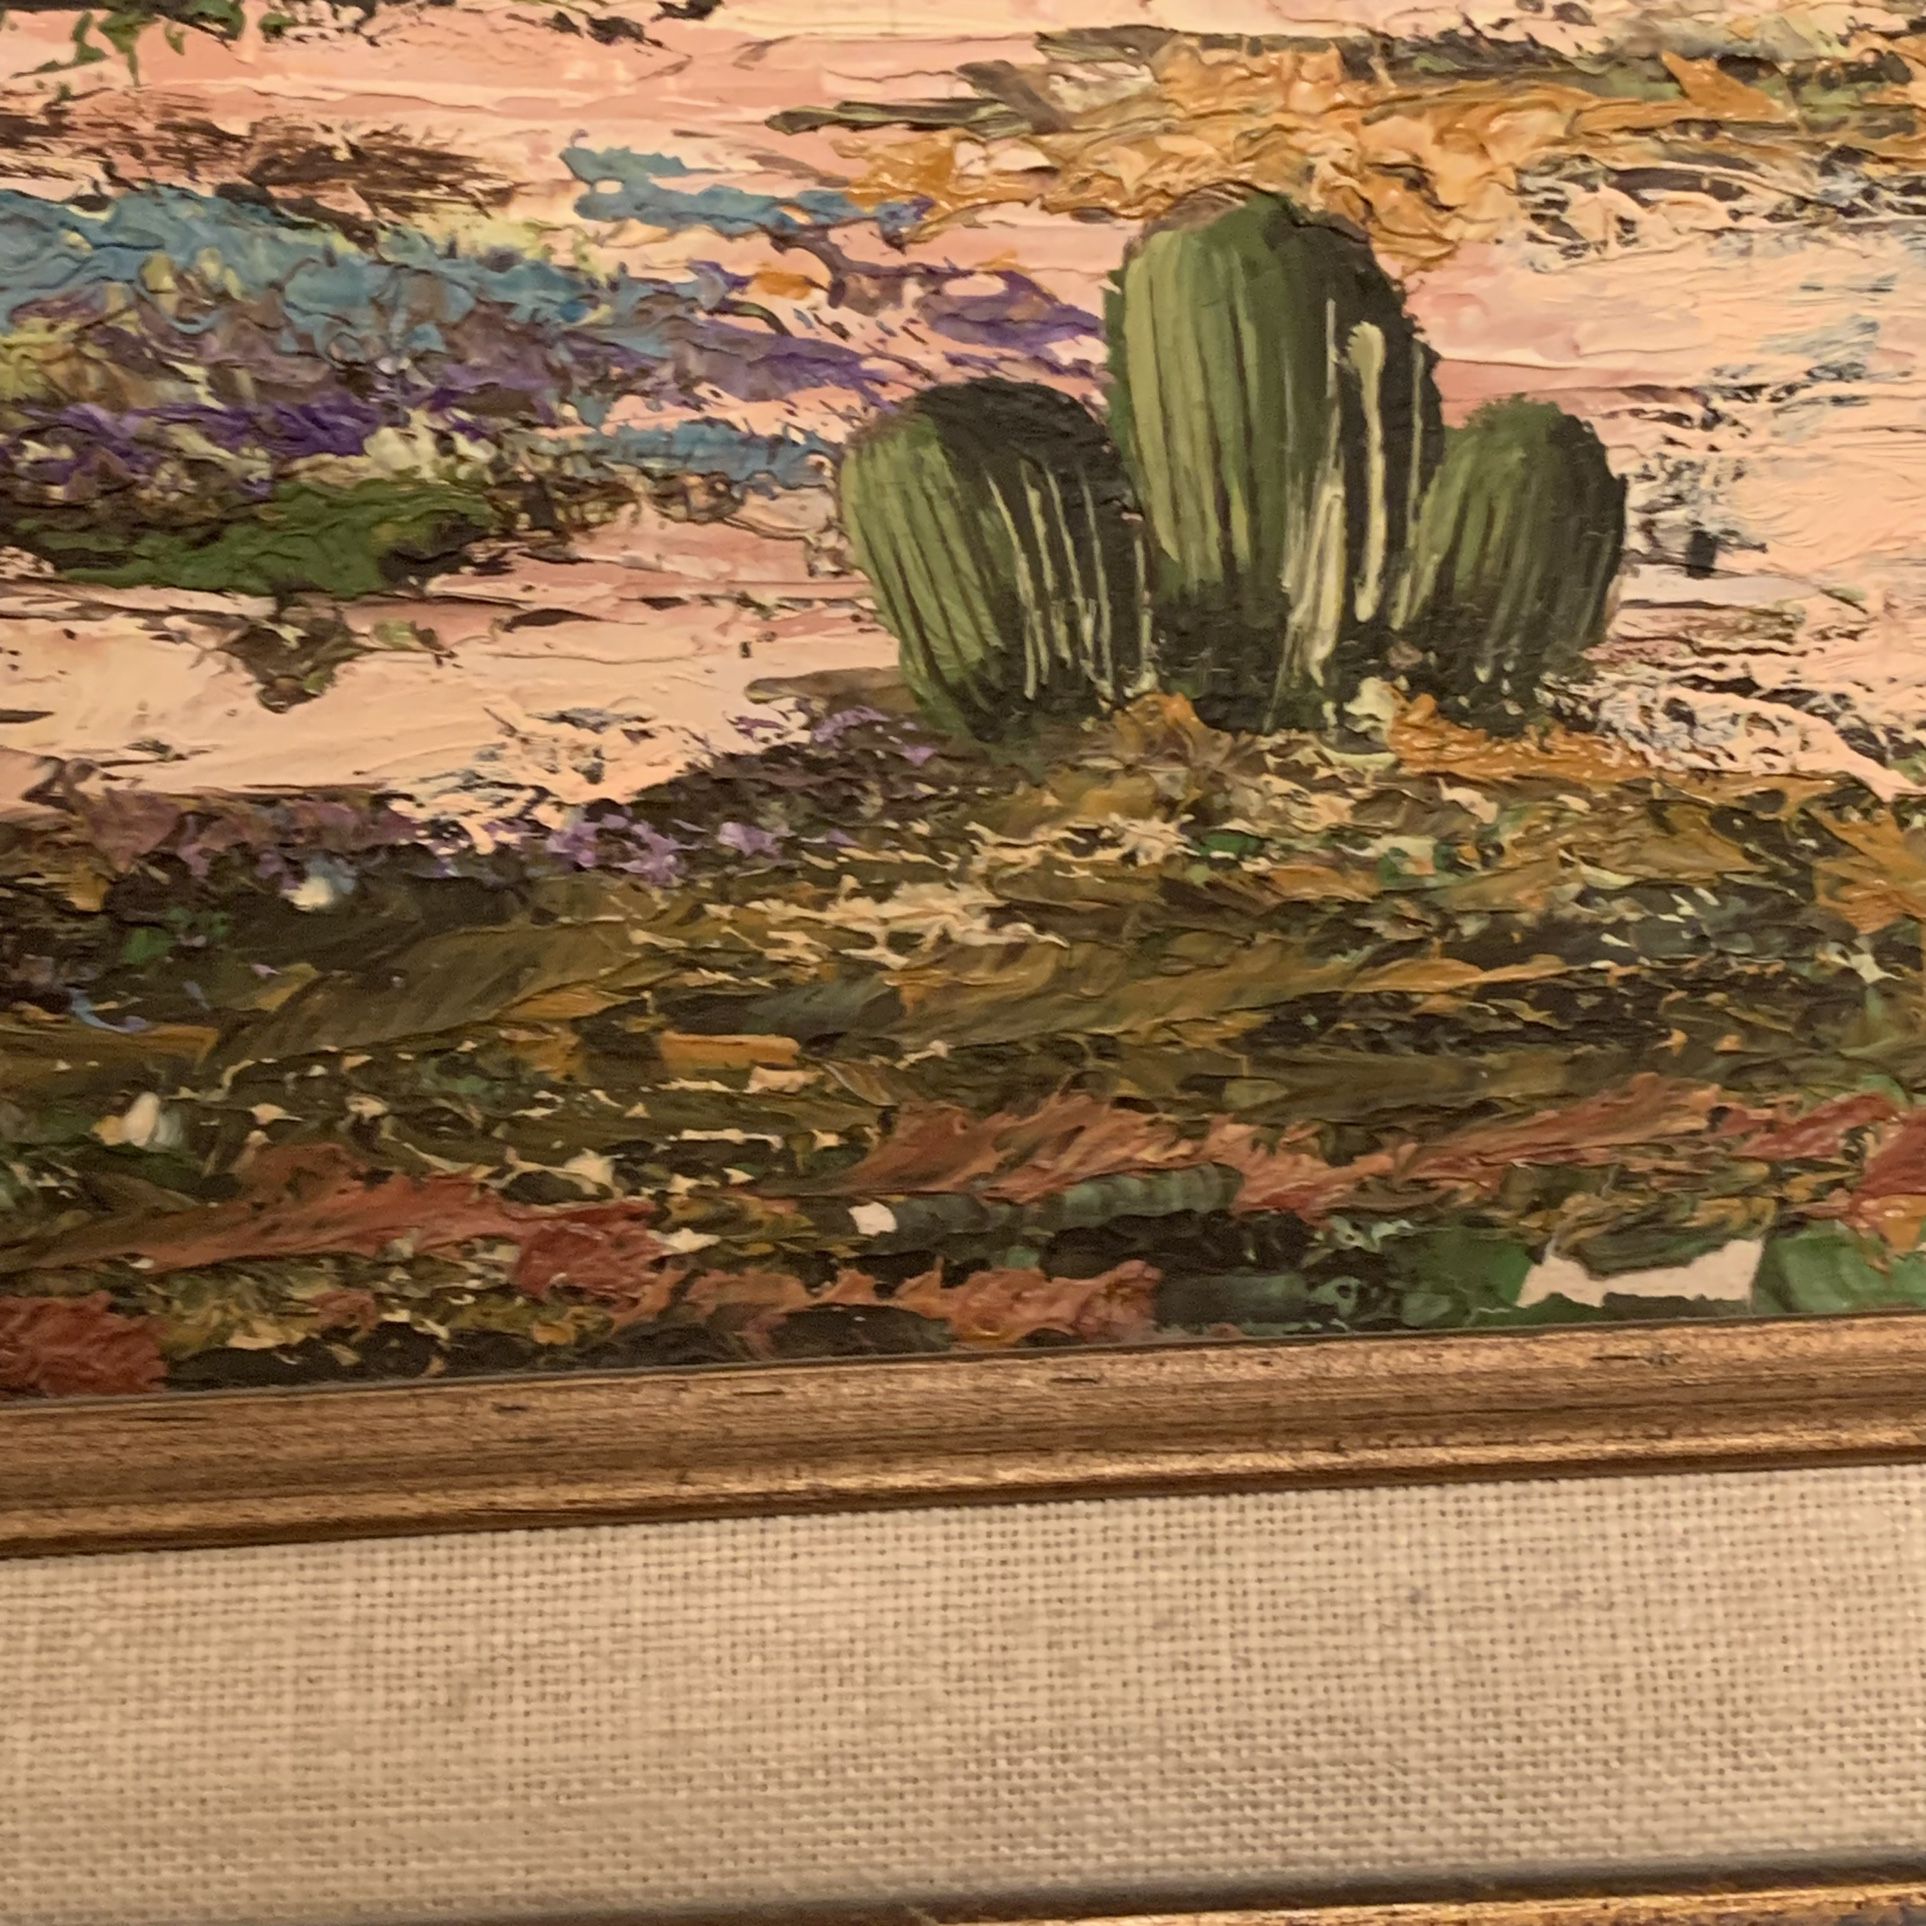 Sonoran desert painting 